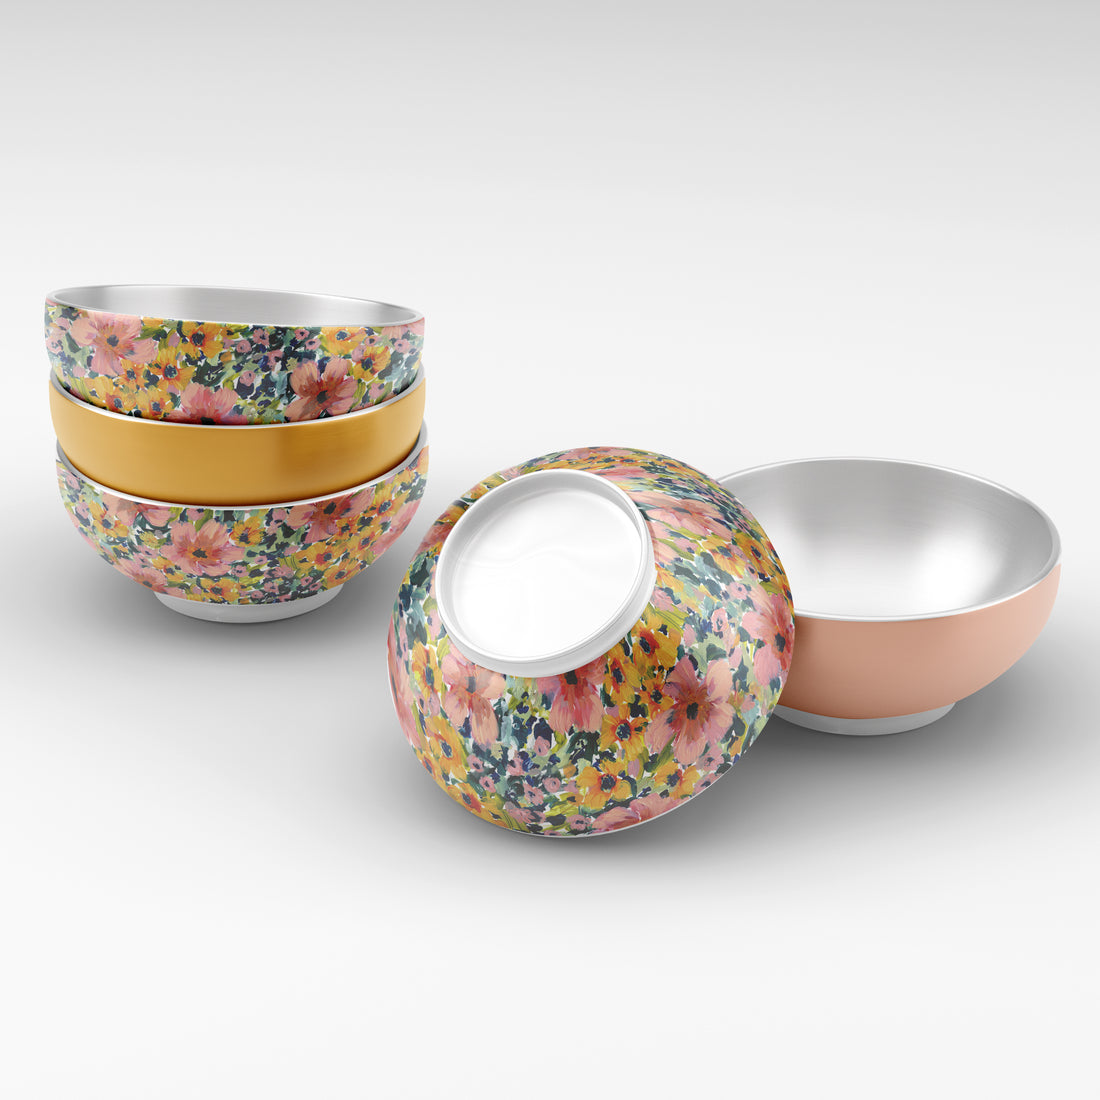 Flower pattern surface design on bowls by Susanna Nousiainen Studio